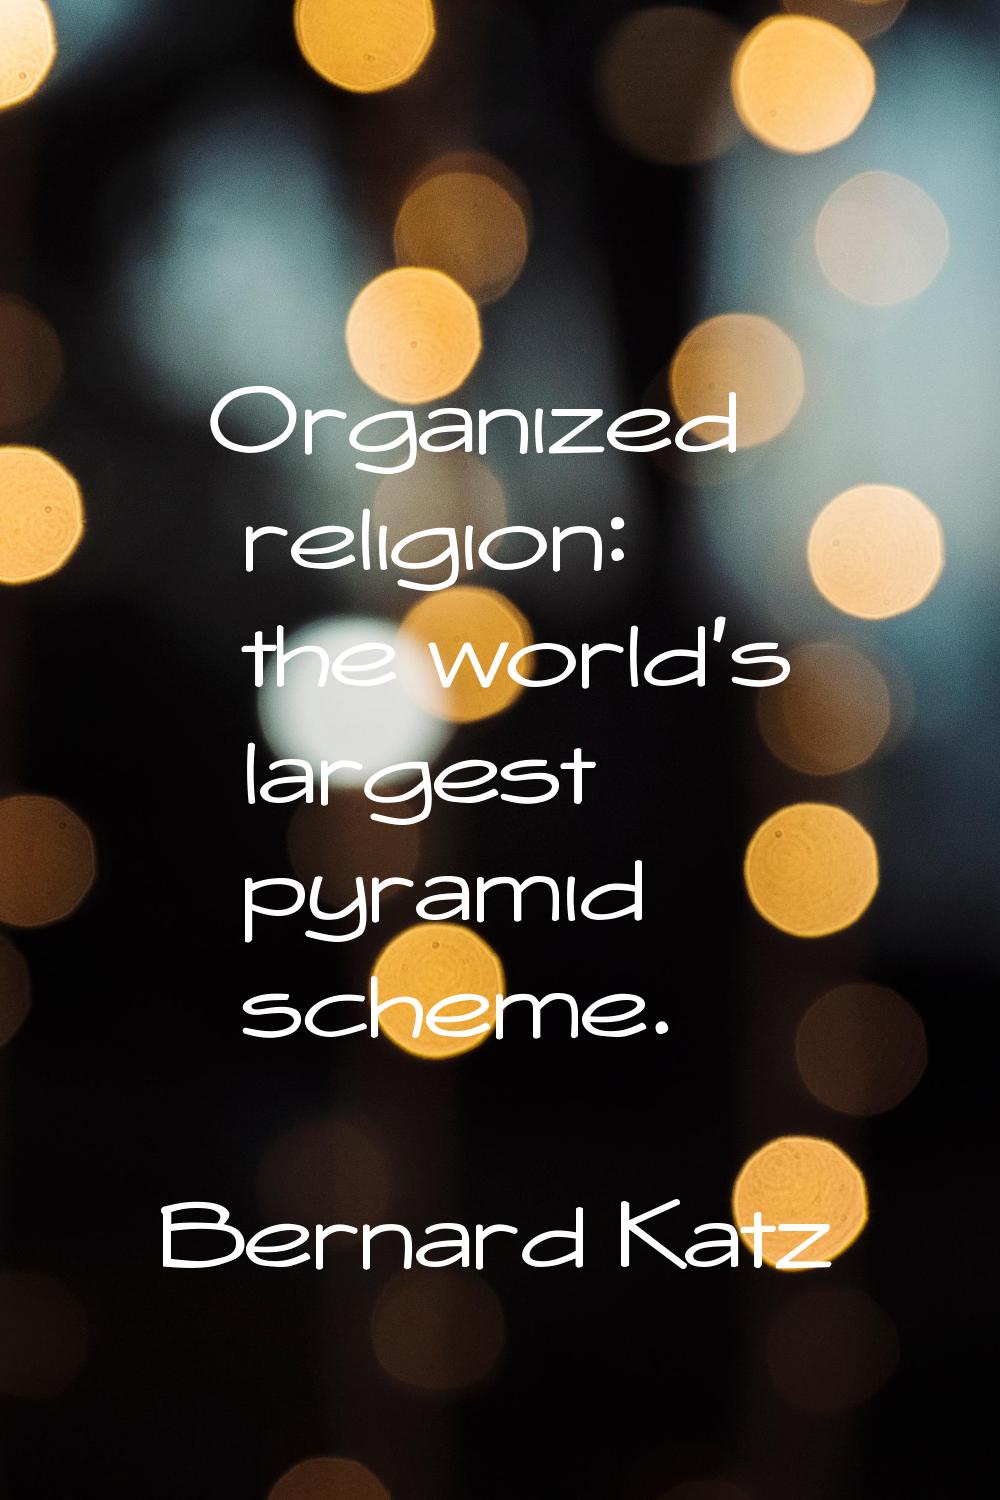 Organized religion: the world's largest pyramid scheme.